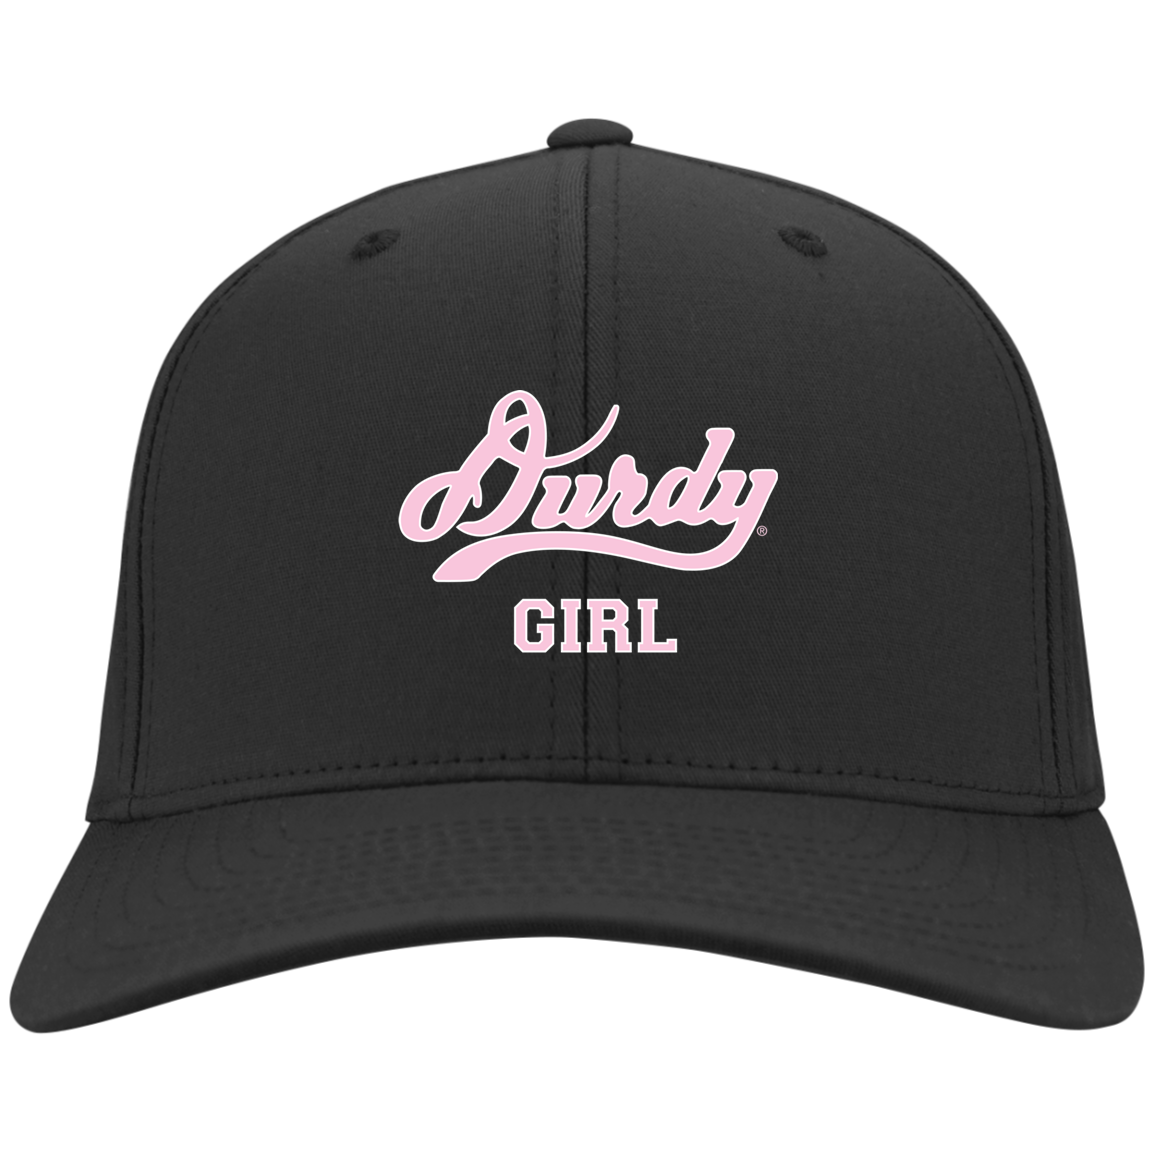 Durdy Girl Sport-Tek Dry Zone Nylon Cap